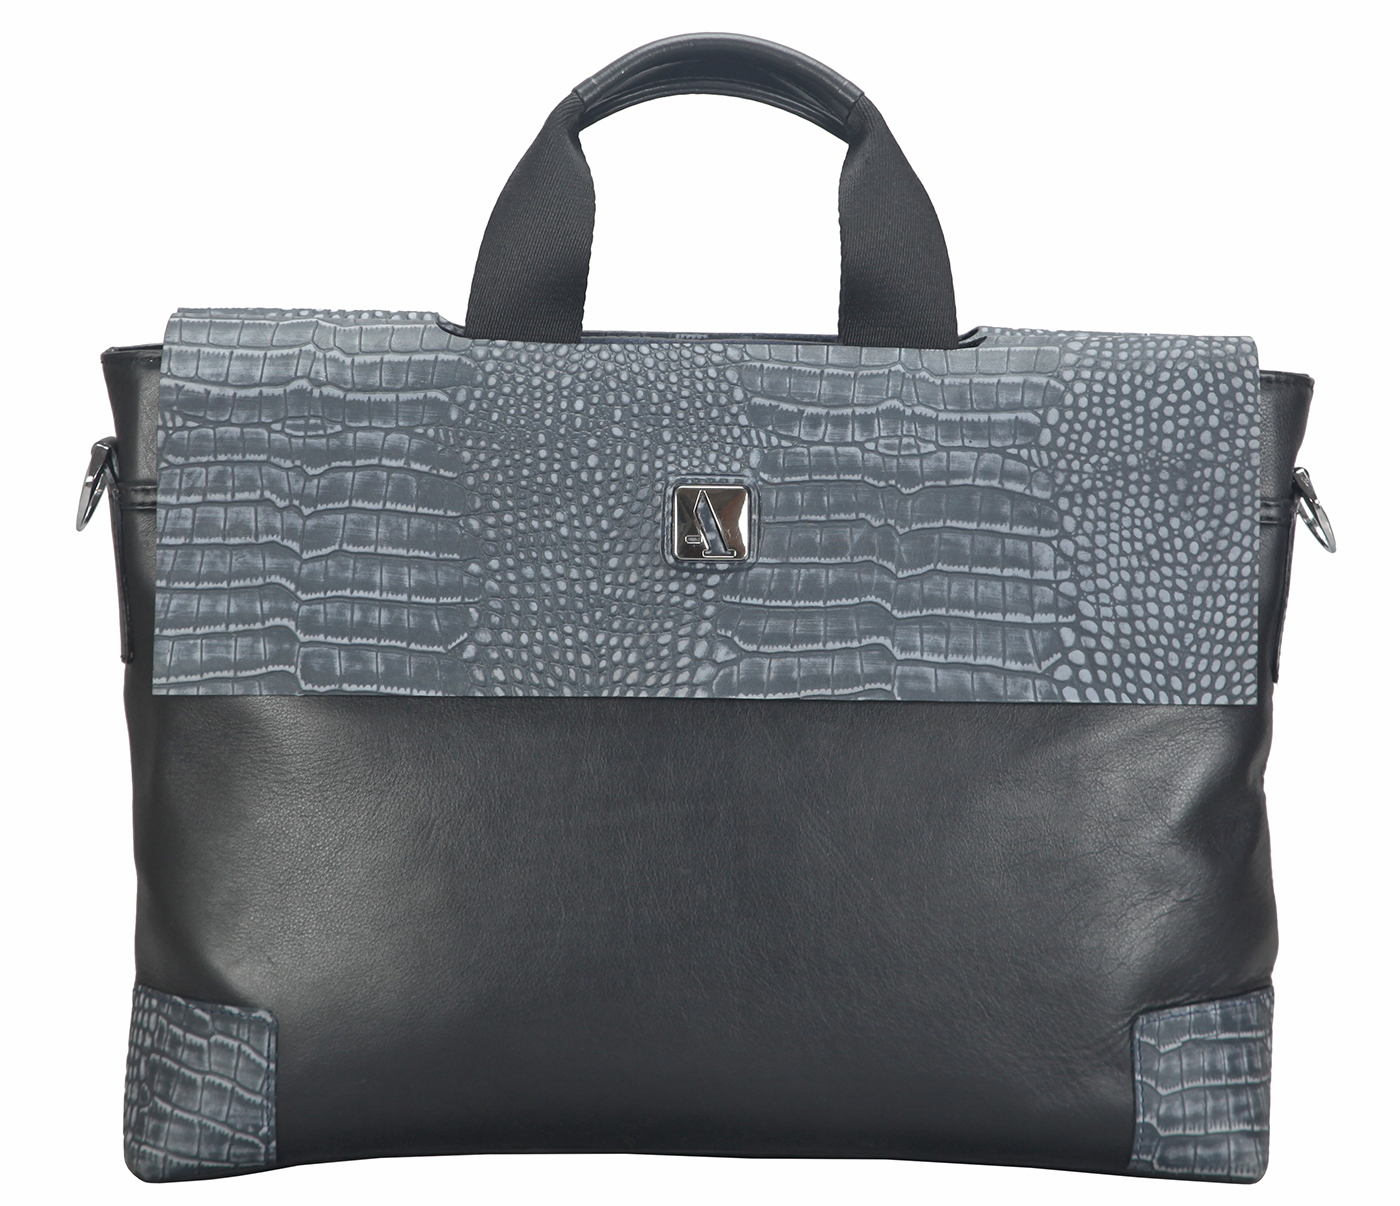 Portfolio / Laptop Bag-Ebner-Laptop, portfolio office executive bag in Genuine Leather - Black/Blue